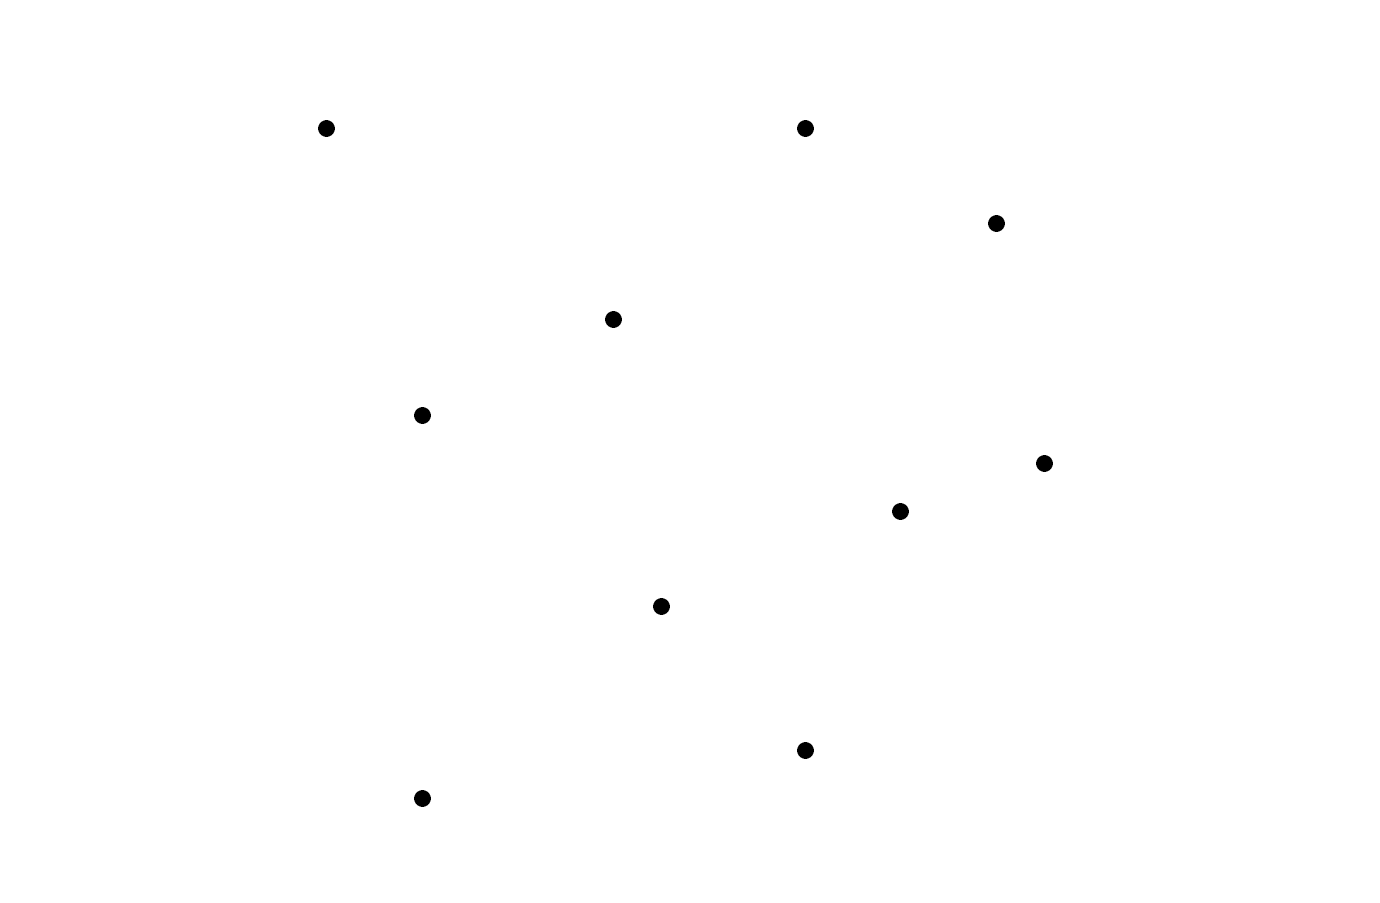 Random dot pattern produced by the script fragment